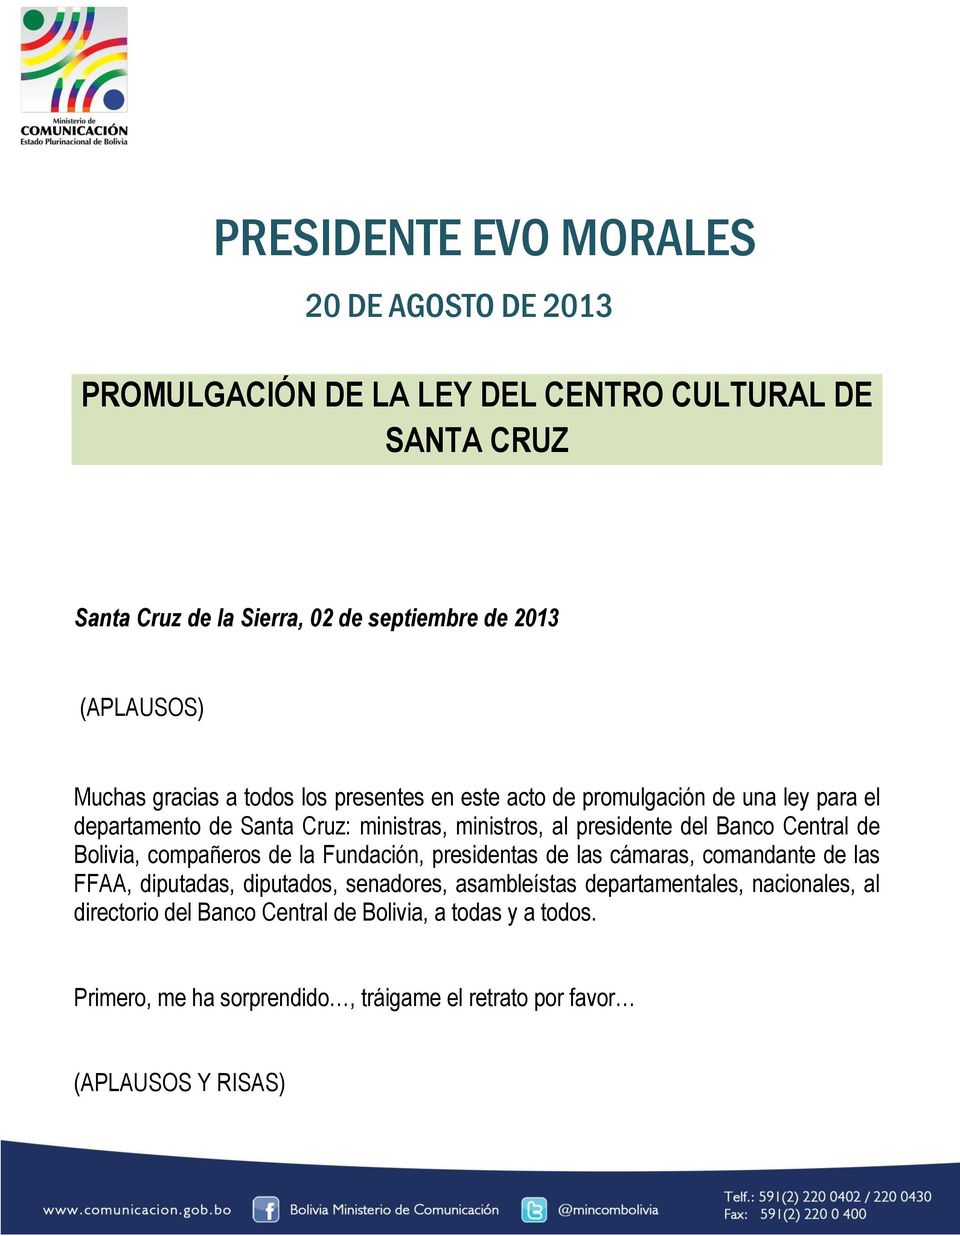 Banco Central de Bolivia, compañeros de la Fundación, presidentas de las cámaras, comandante de las FFAA, diputadas, diputados, senadores, asambleístas